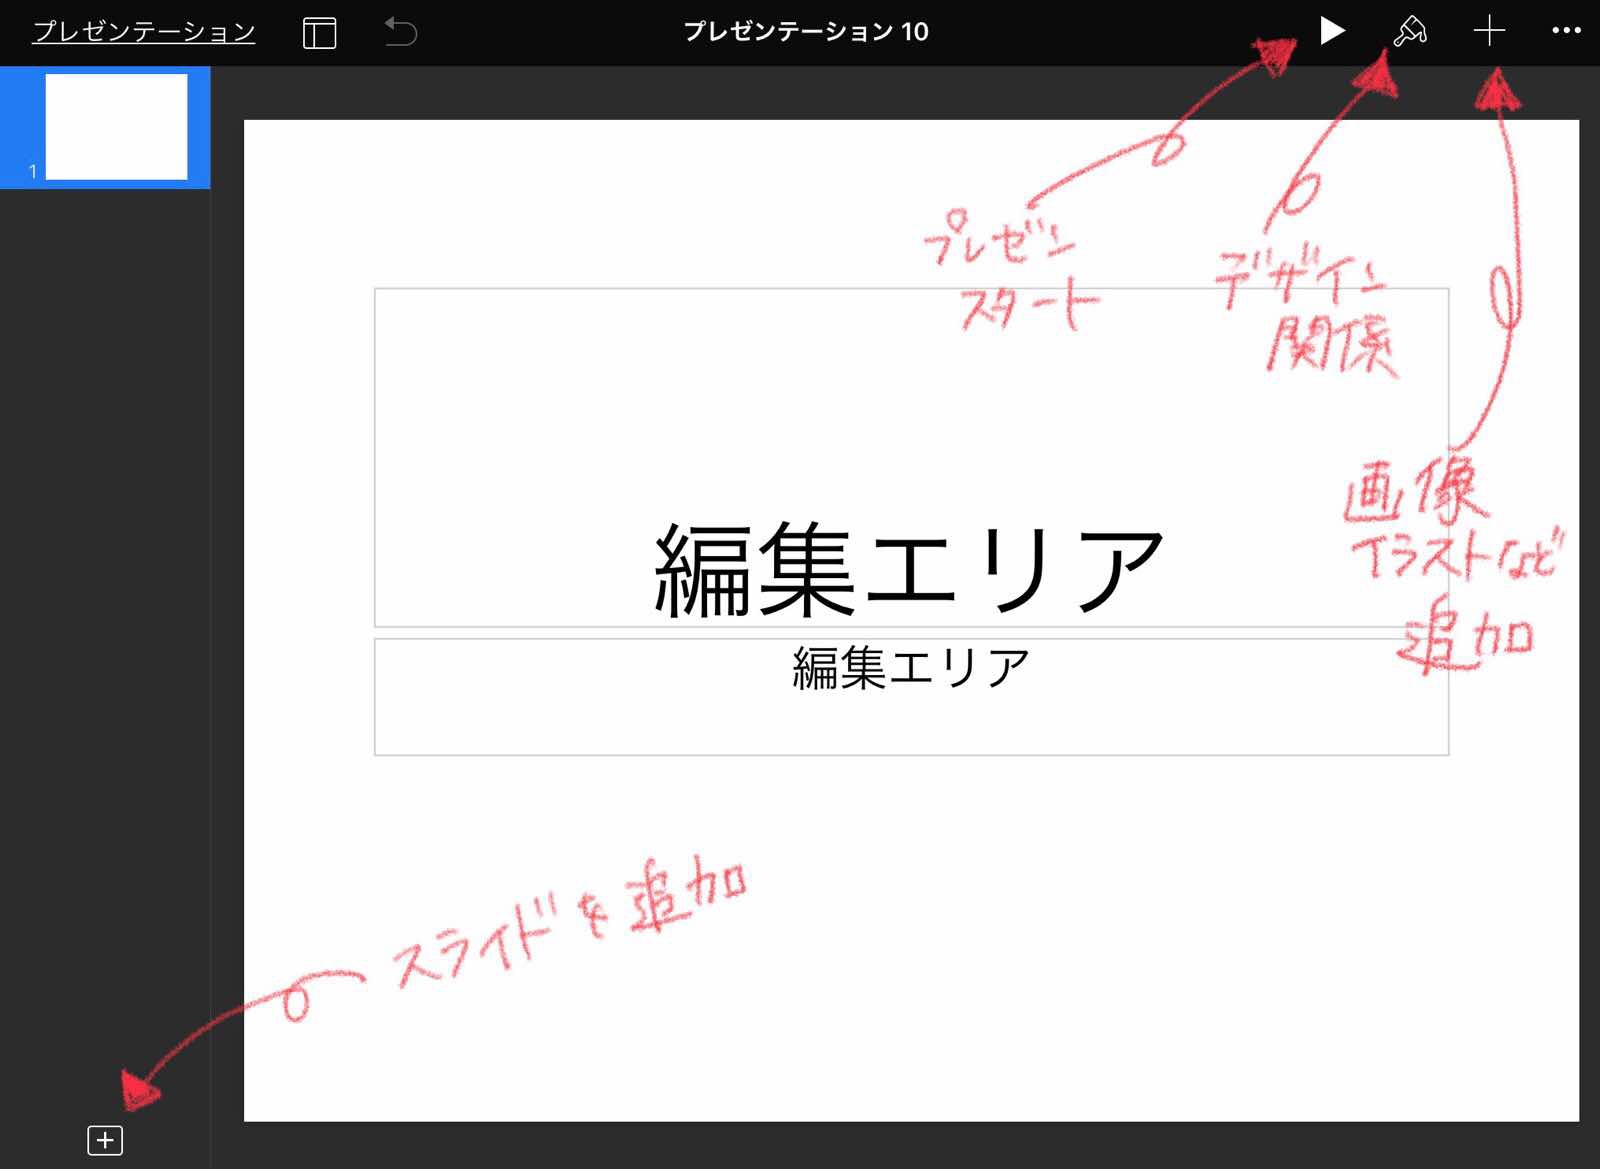 Ipadのkeynoteでプレゼンを作る方法解説します Kunyotsu Log